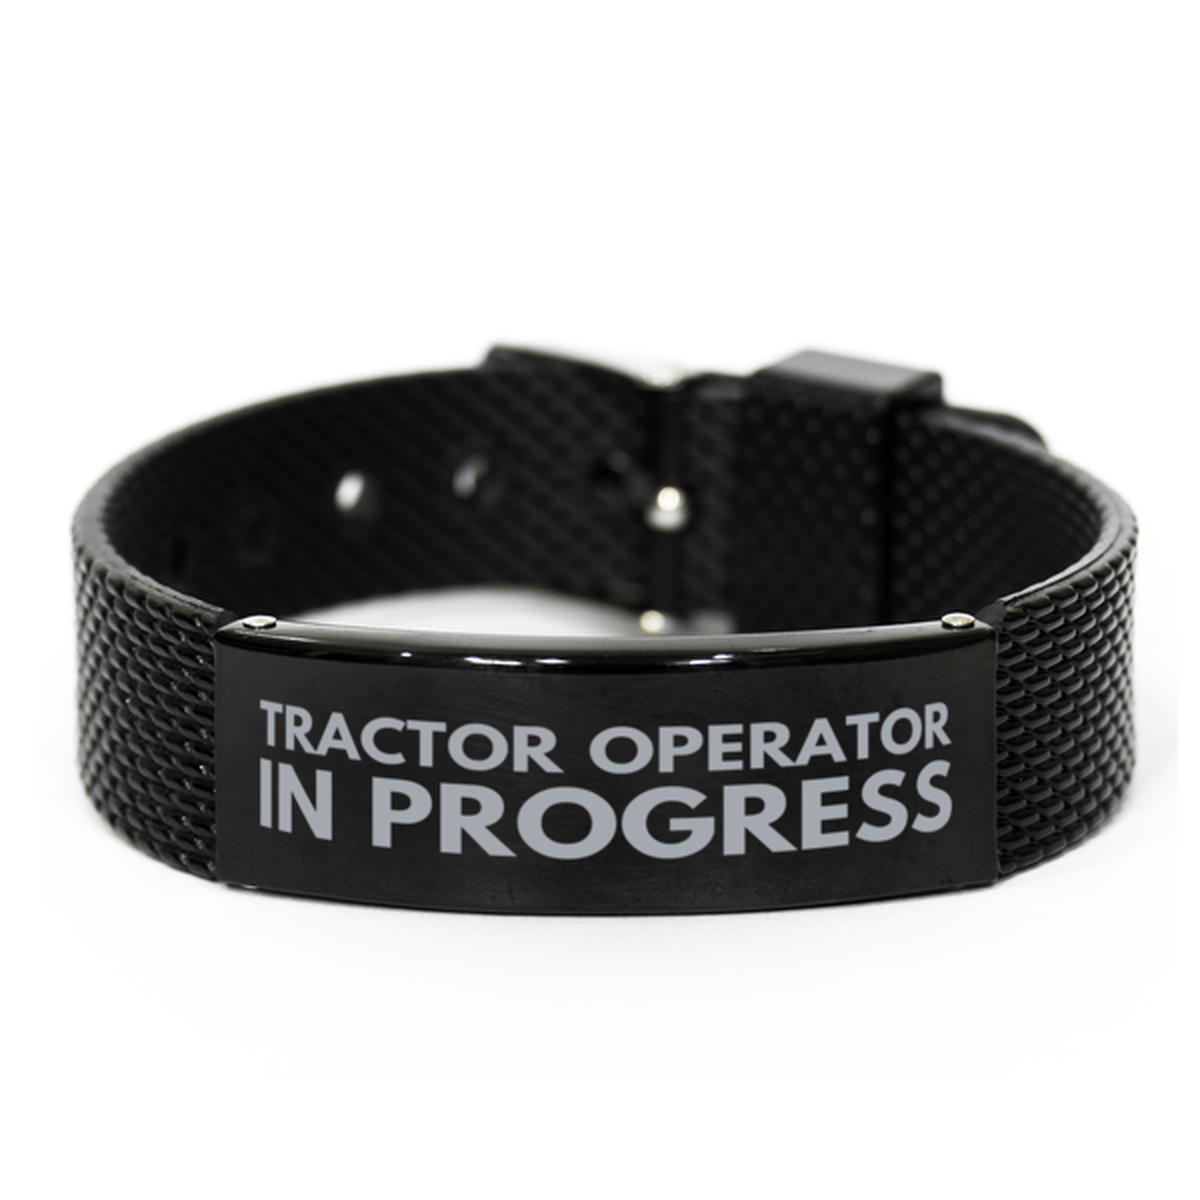 Inspirational Tractor Operator Black Shark Mesh Bracelet, Tractor Operator In Progress, Best Graduation Gifts for Students